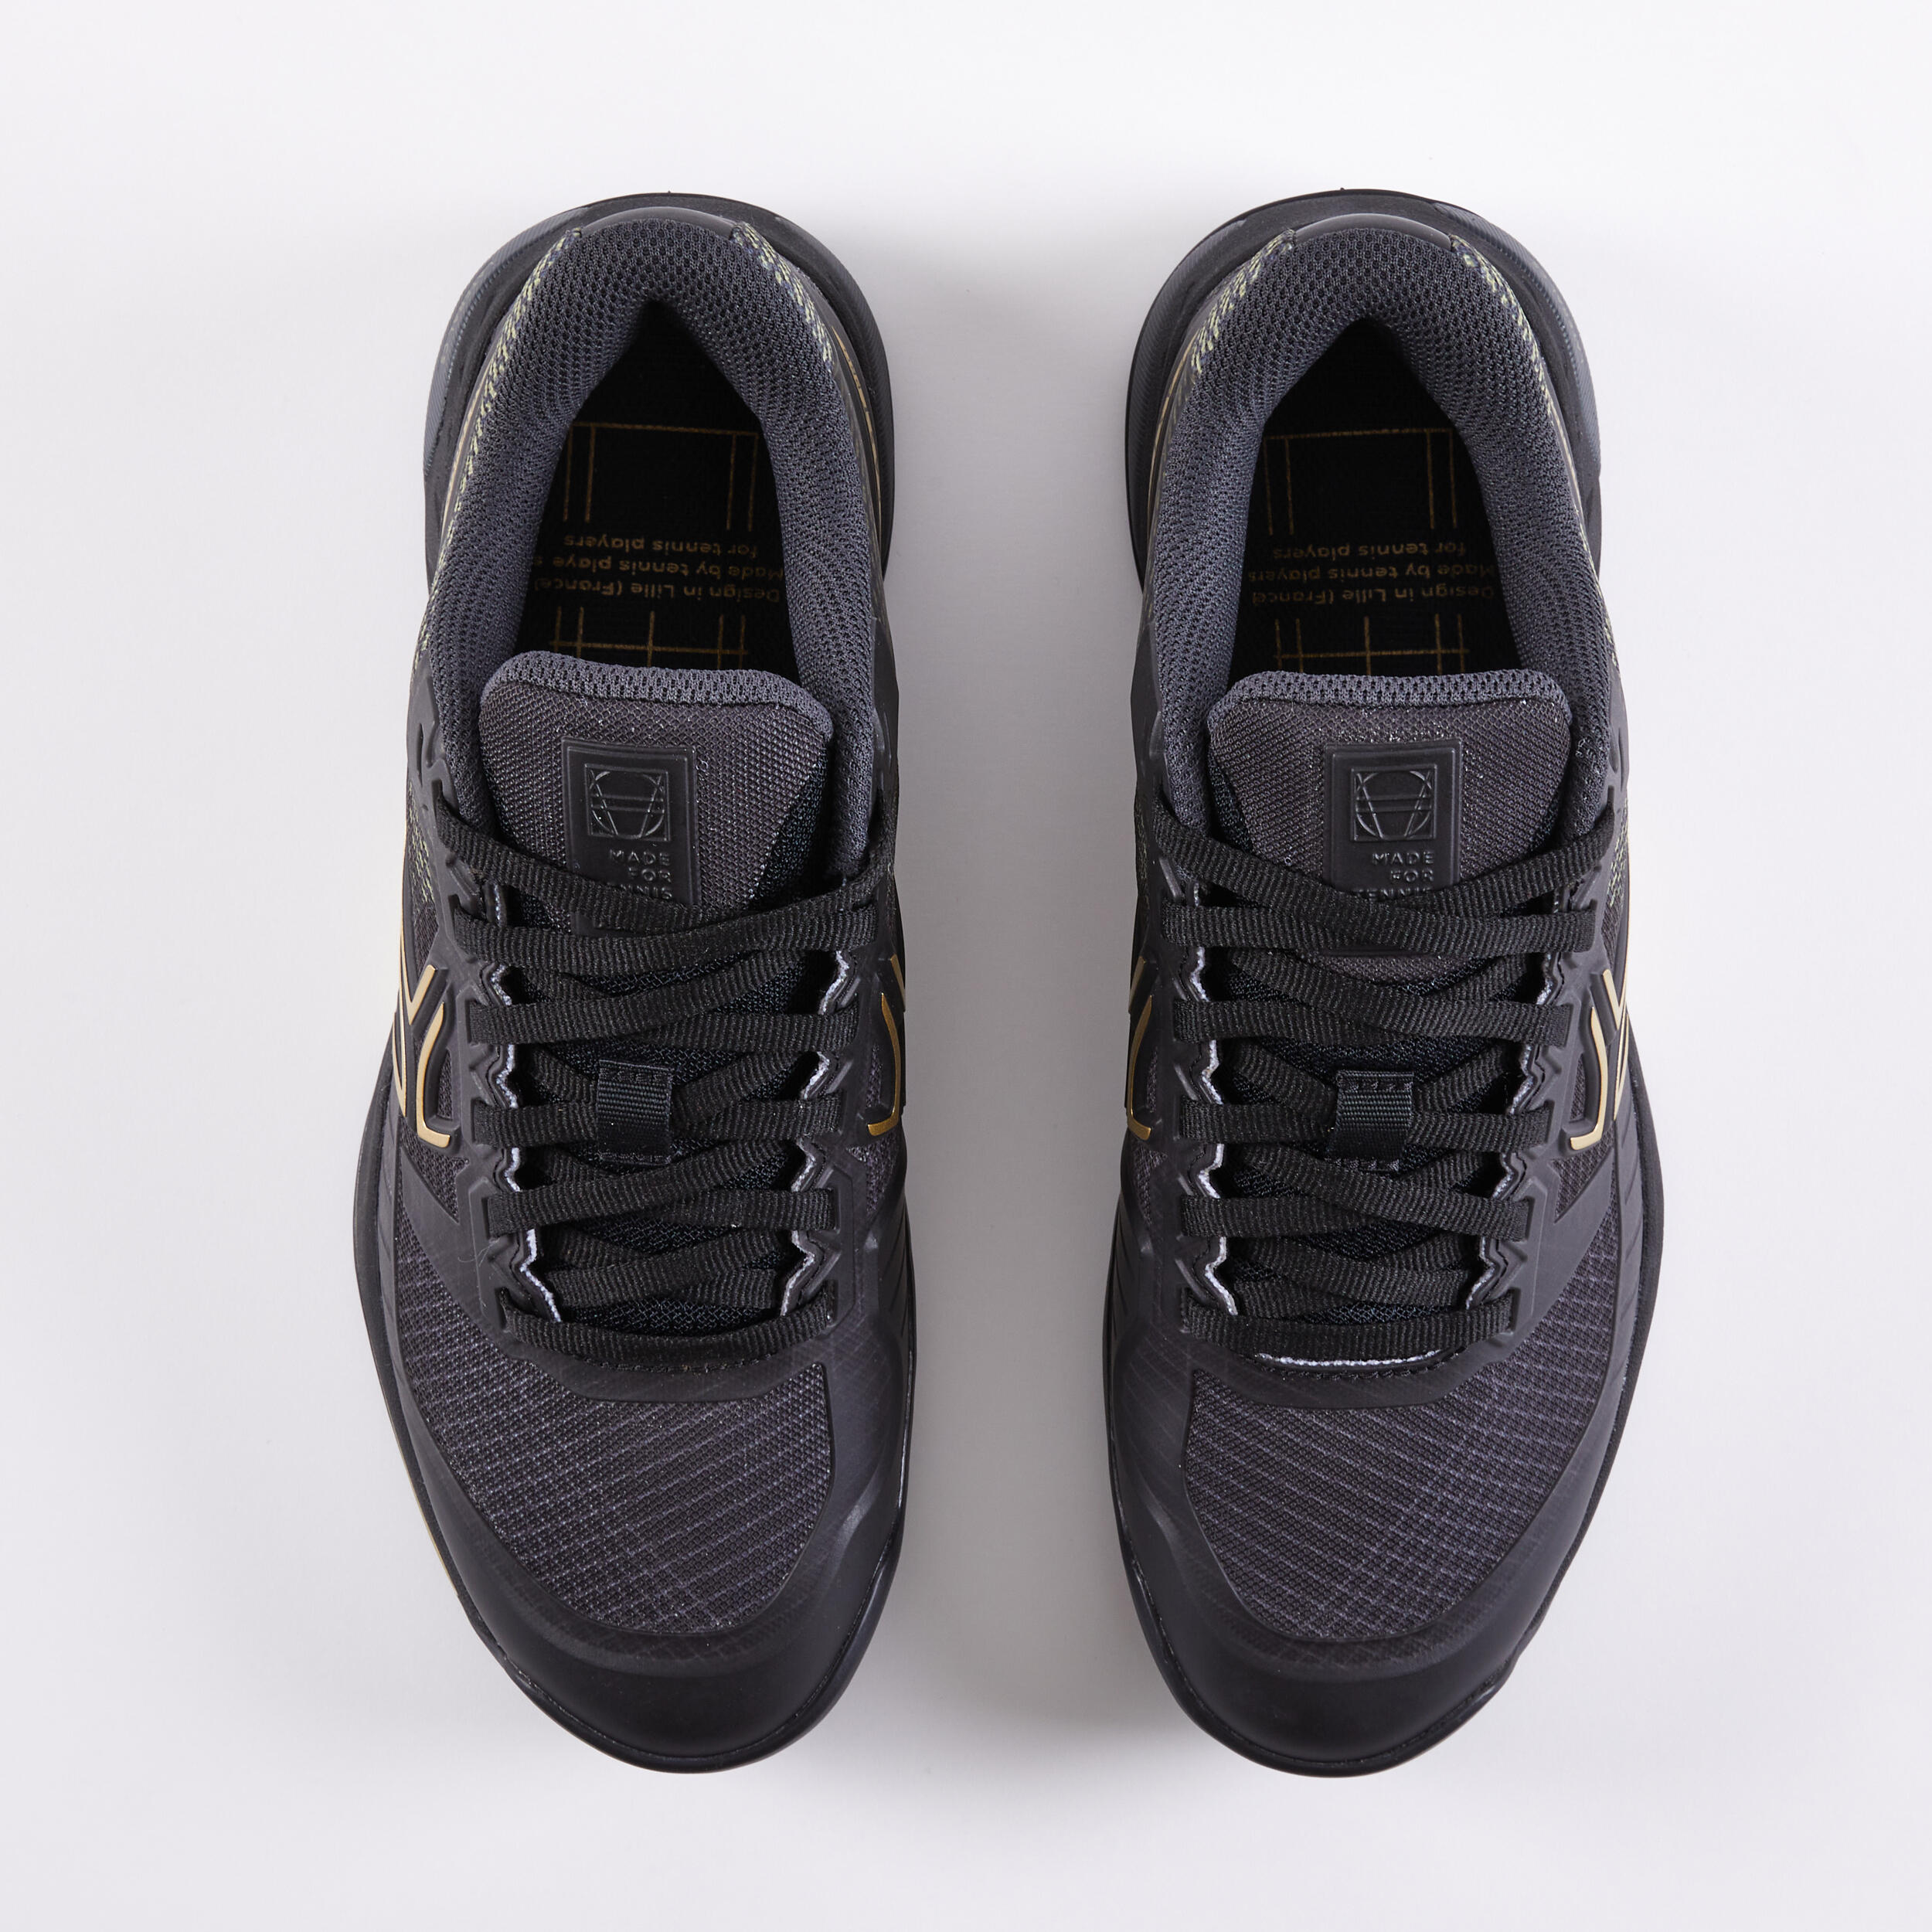 Women's Clay Court Tennis Shoes TS990 - Black 7/8